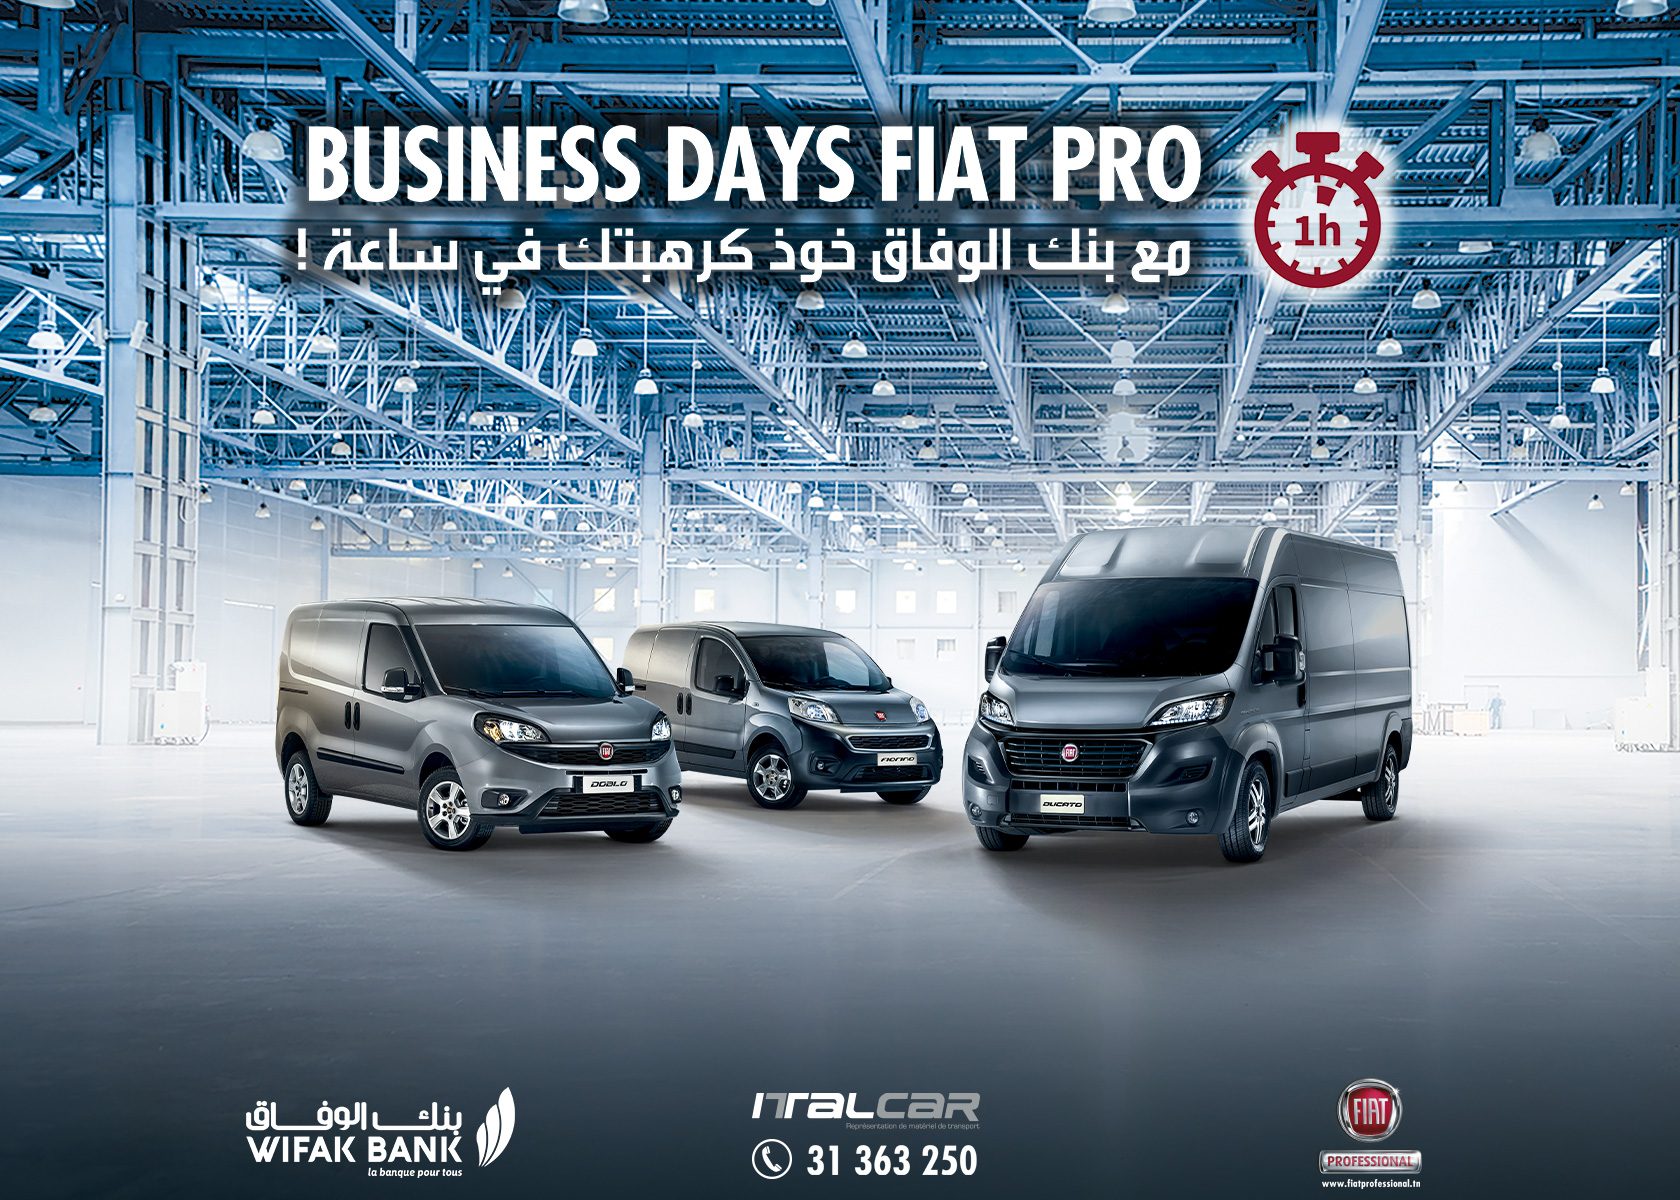 Business Days Fiat Pro